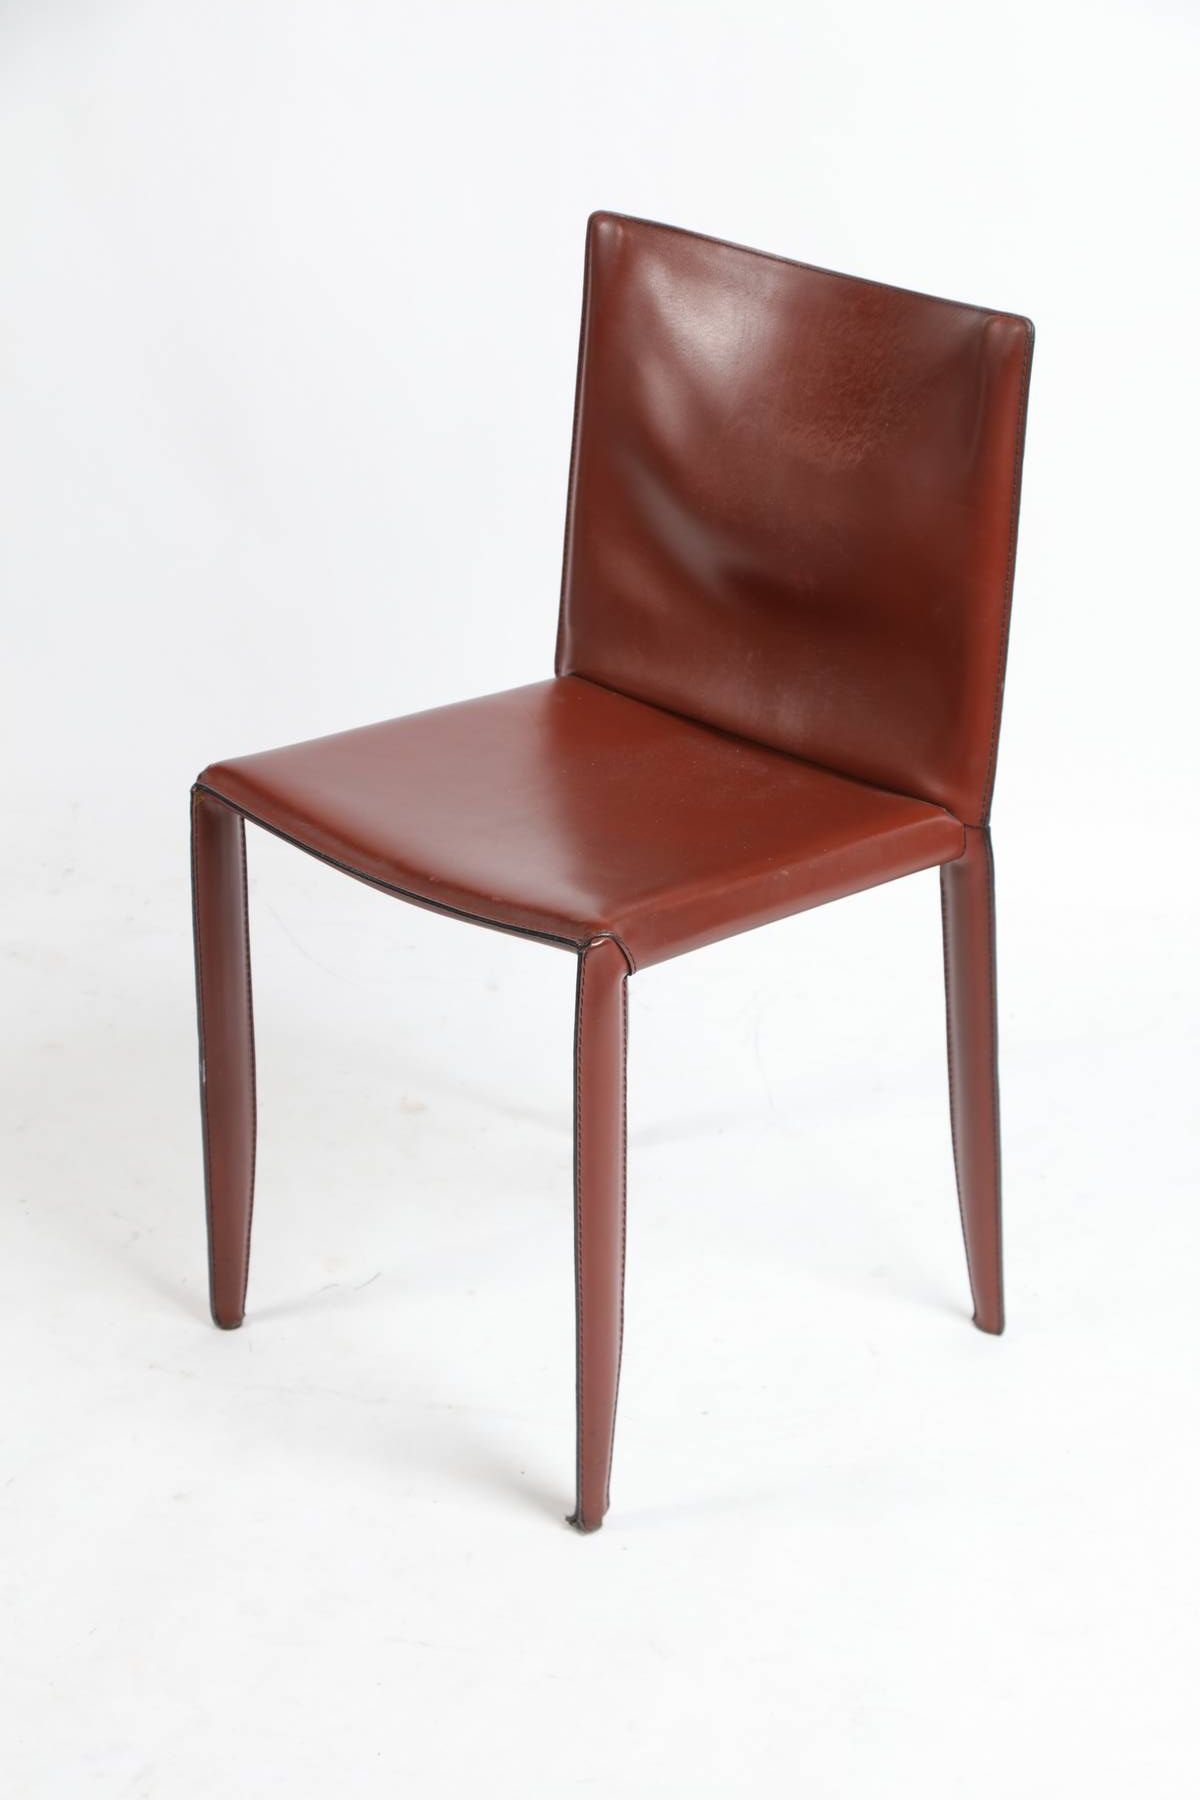 Null CATTELAN, Italia, burgundy leather chair.